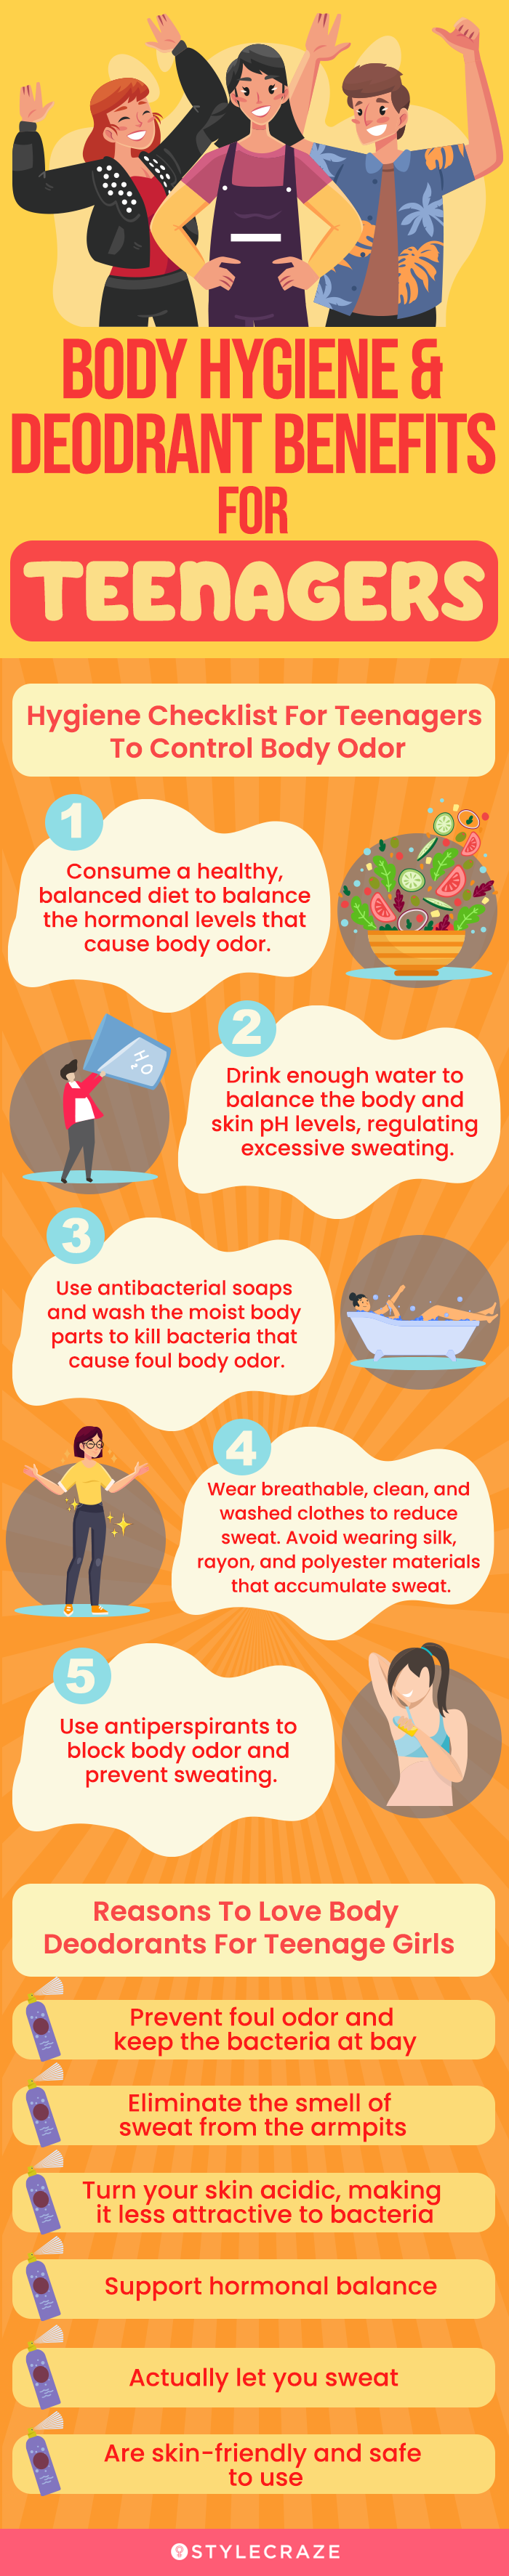 Body Hygiene & Deodorant Benefits For Teenagers